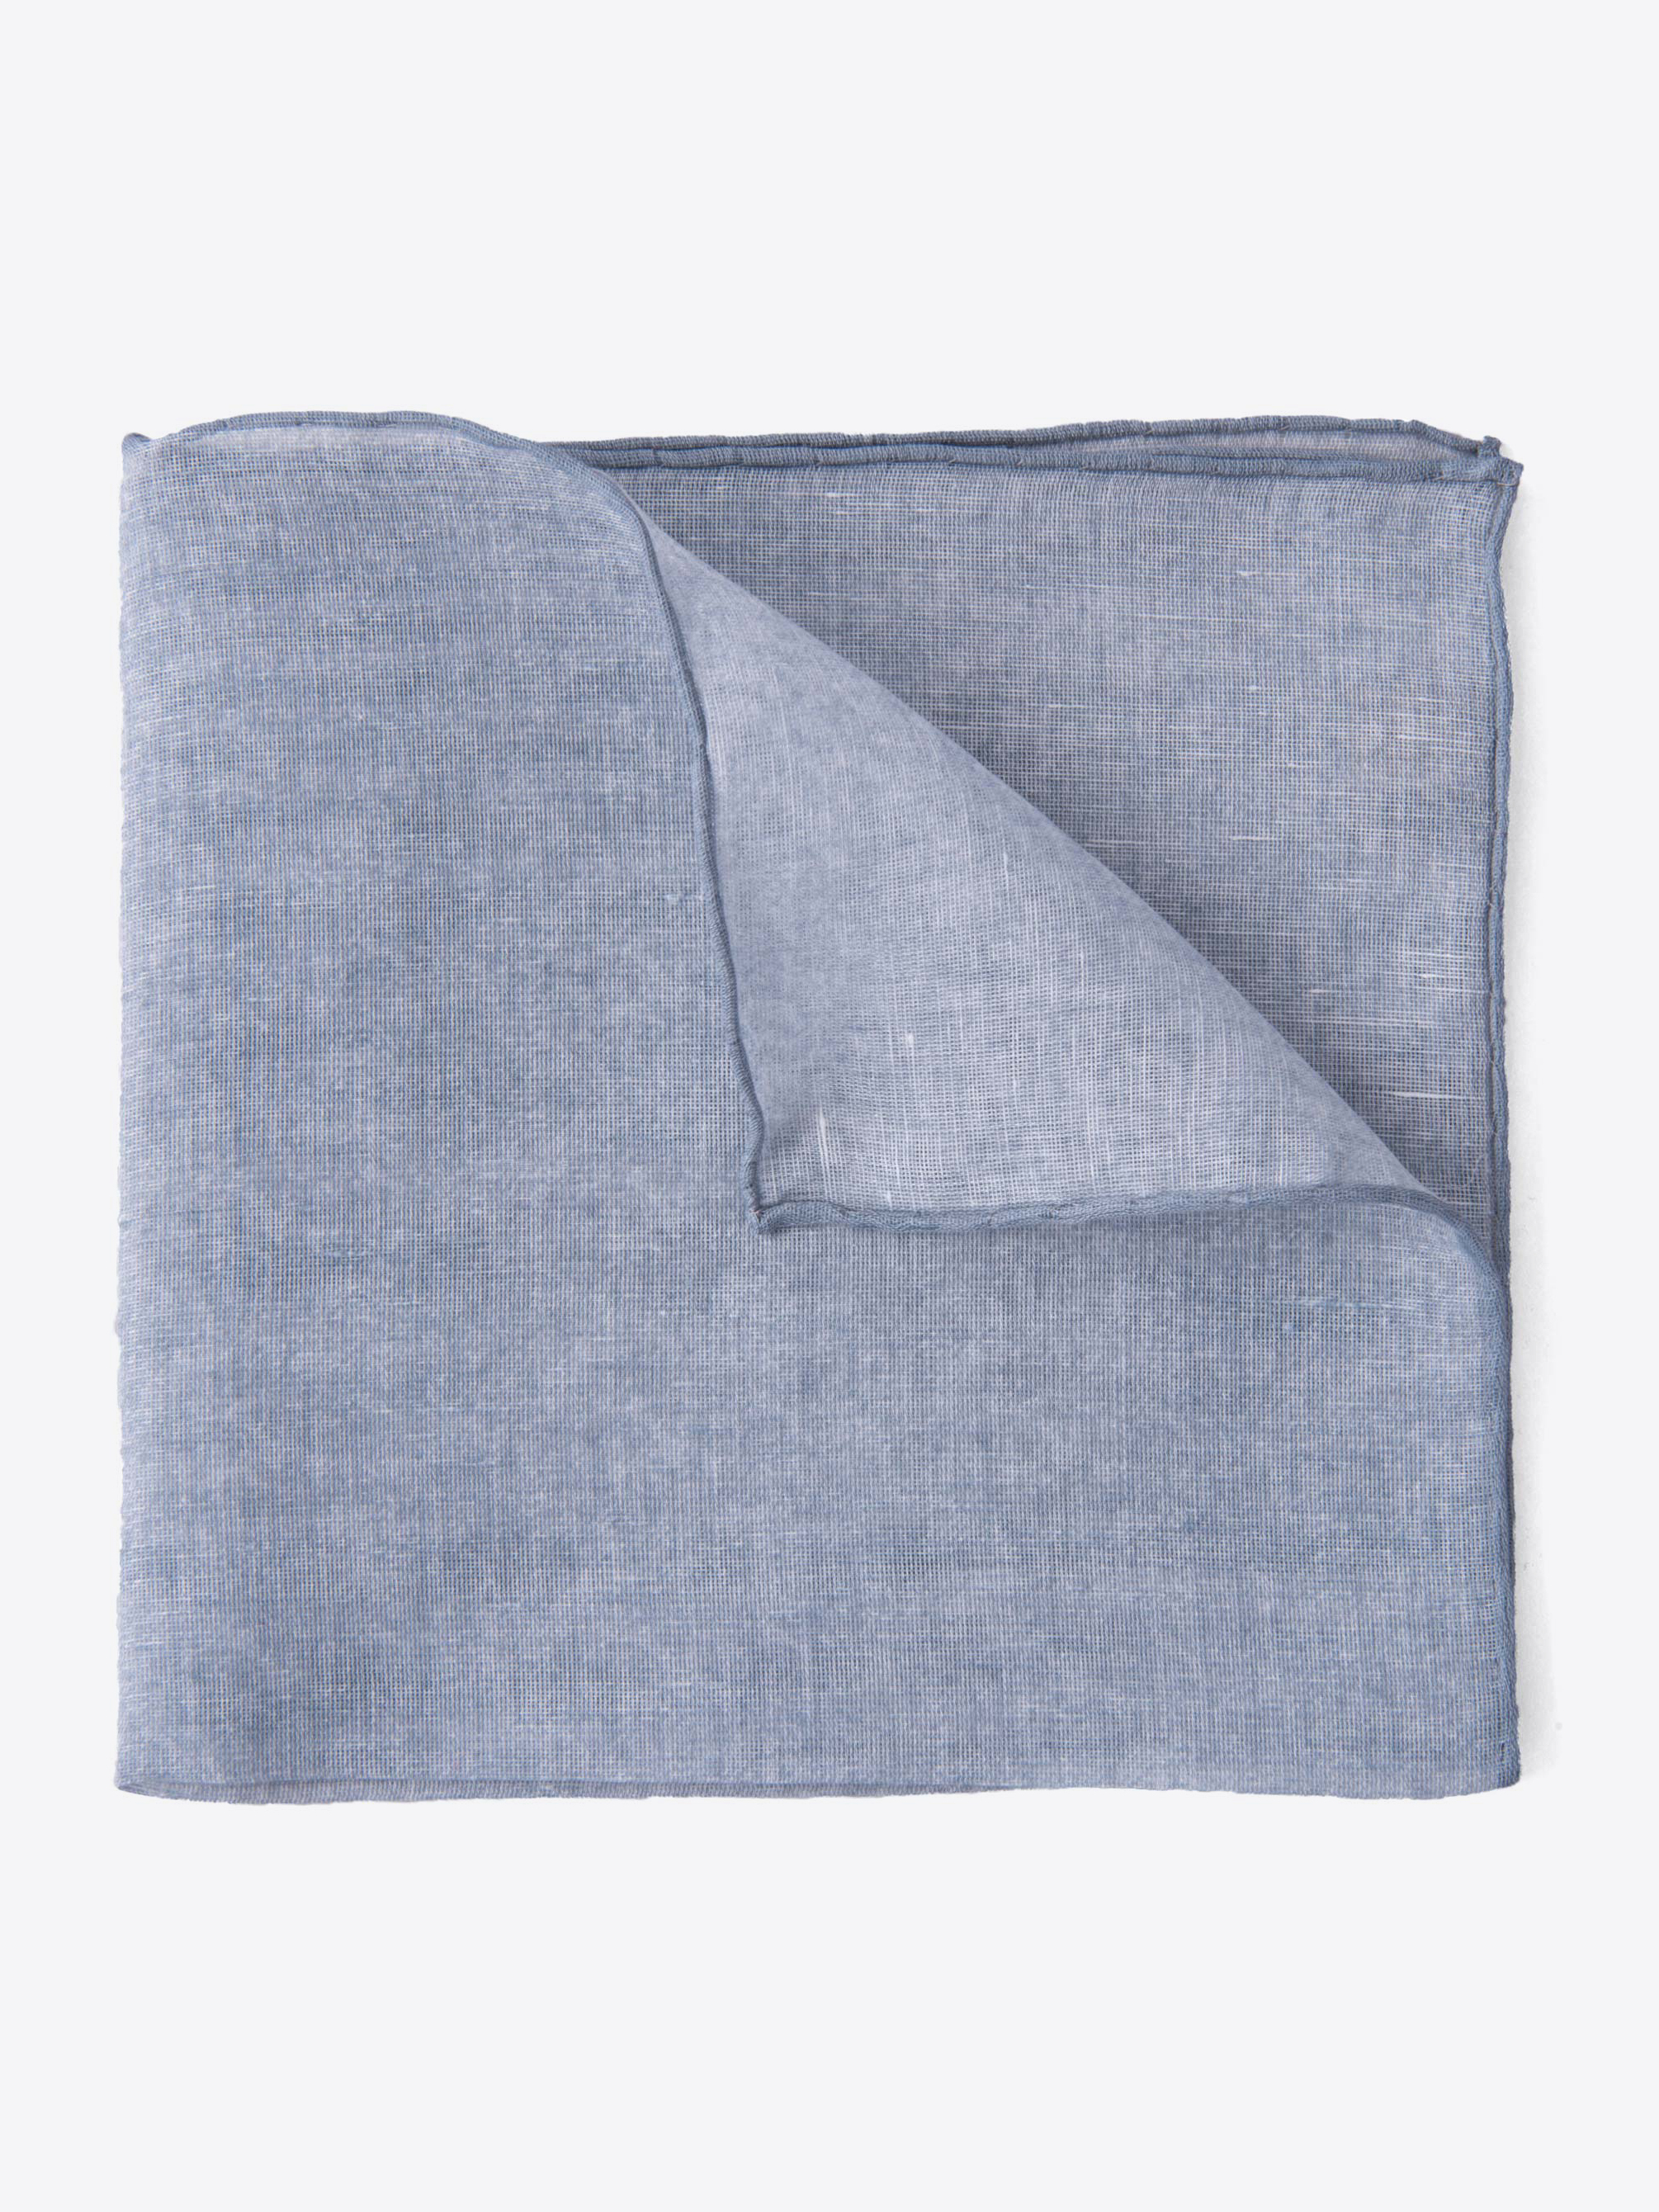 Zoom Image of Grey Cotton Linen Pocket Square